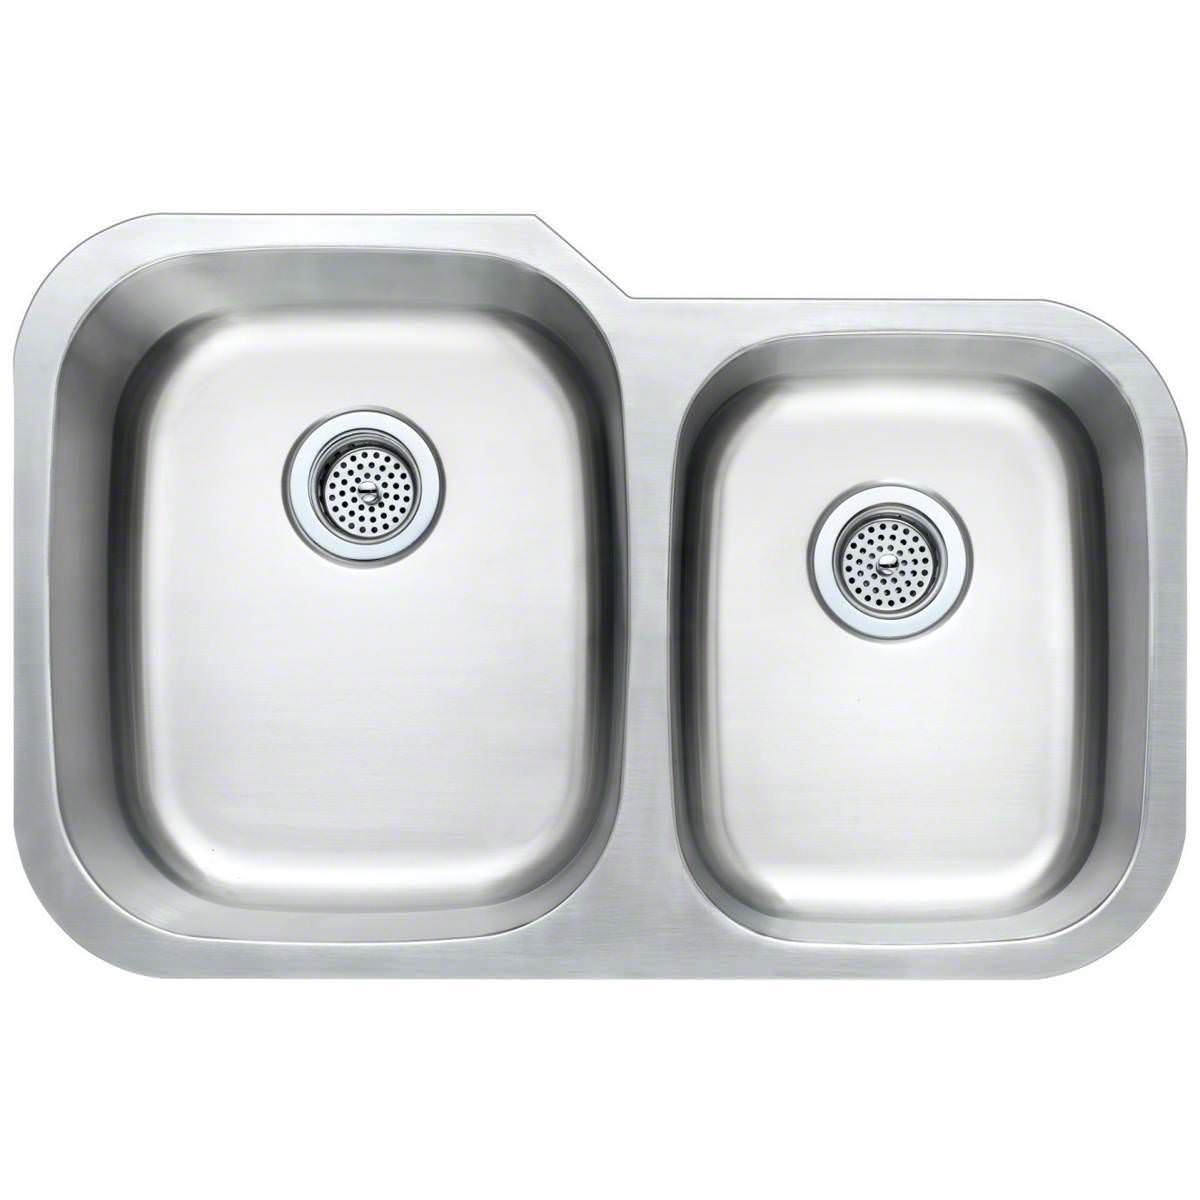 stainless steel undermount sink reviews